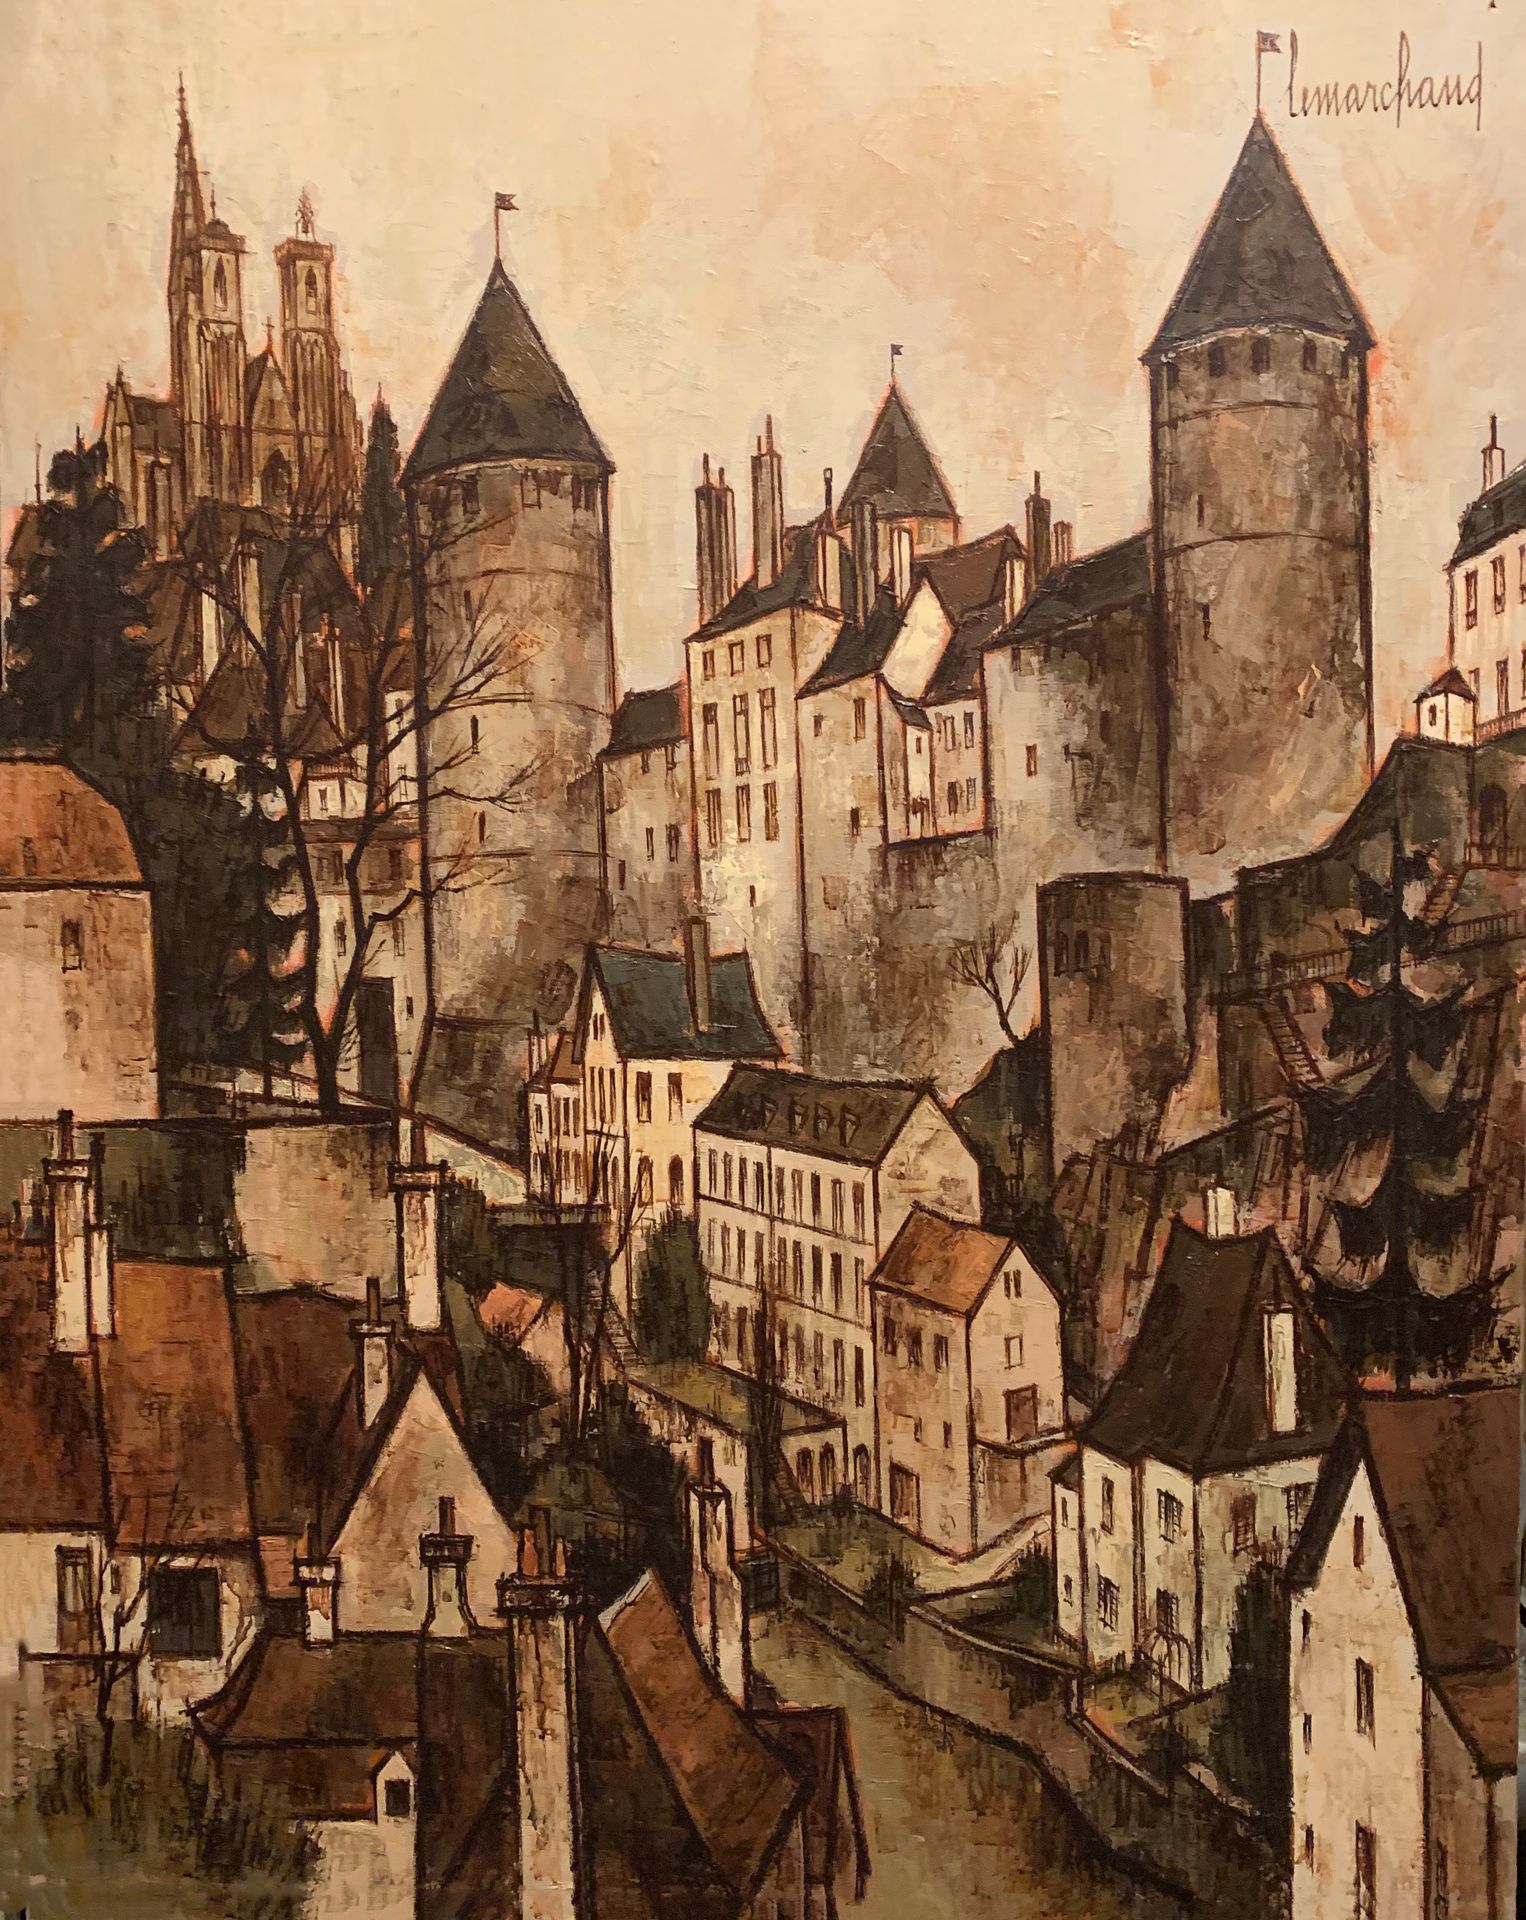 Null 皮埃尔-莱马赫德 (1906-1970)

有防御工事的城市景观

布面油画，右上角有签名

100 x 81厘米。